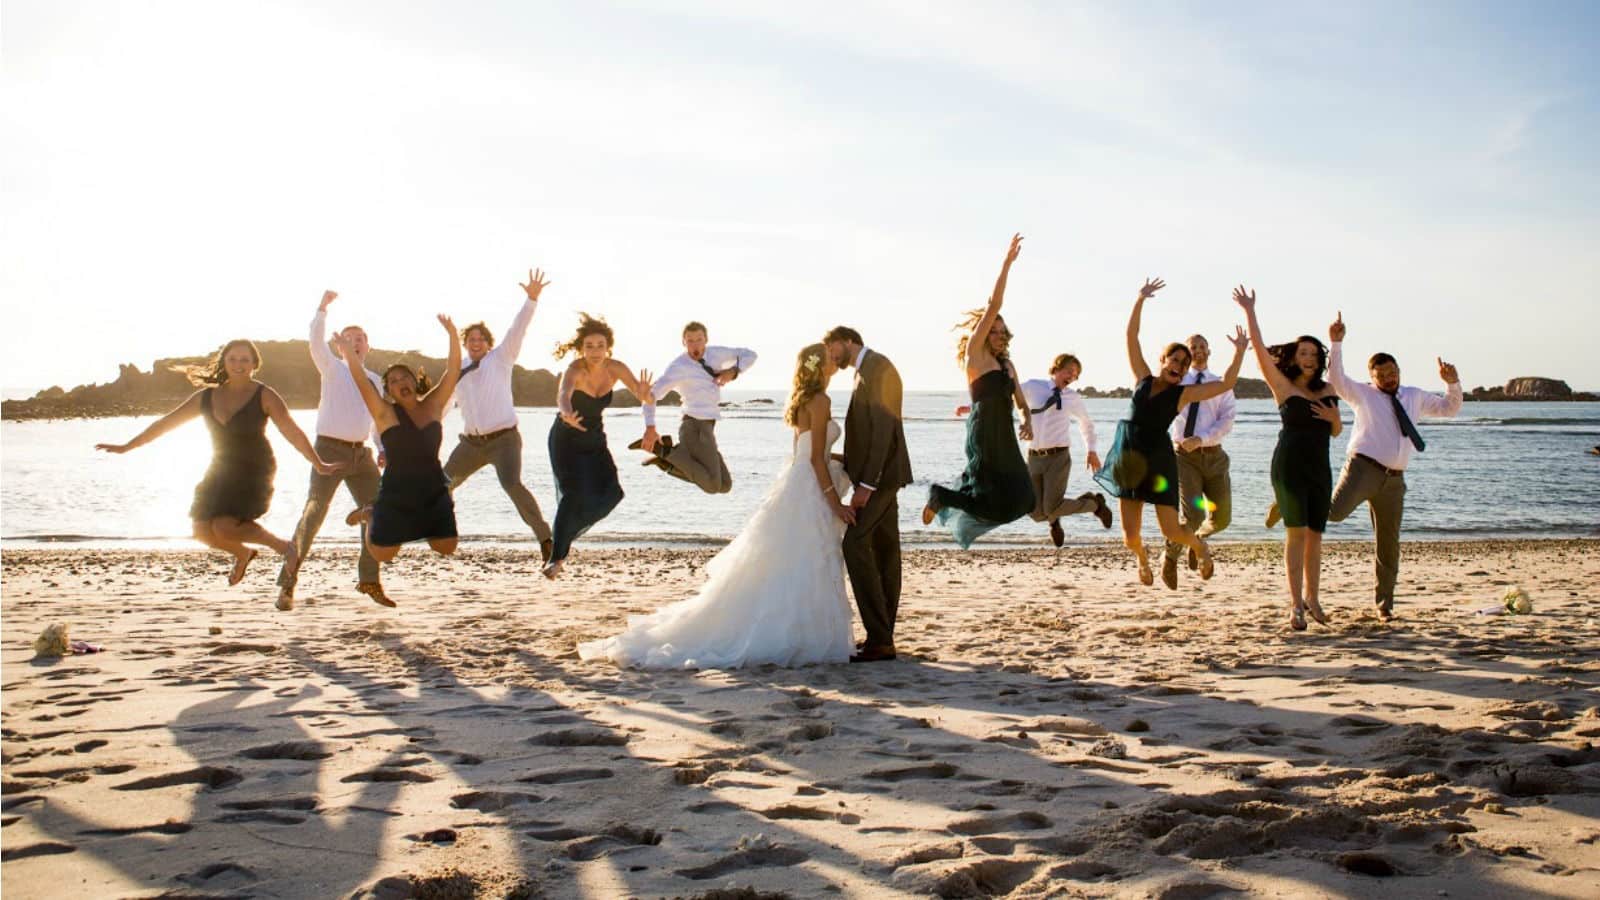 A wedding at The St. Regis Punta Mita Resort